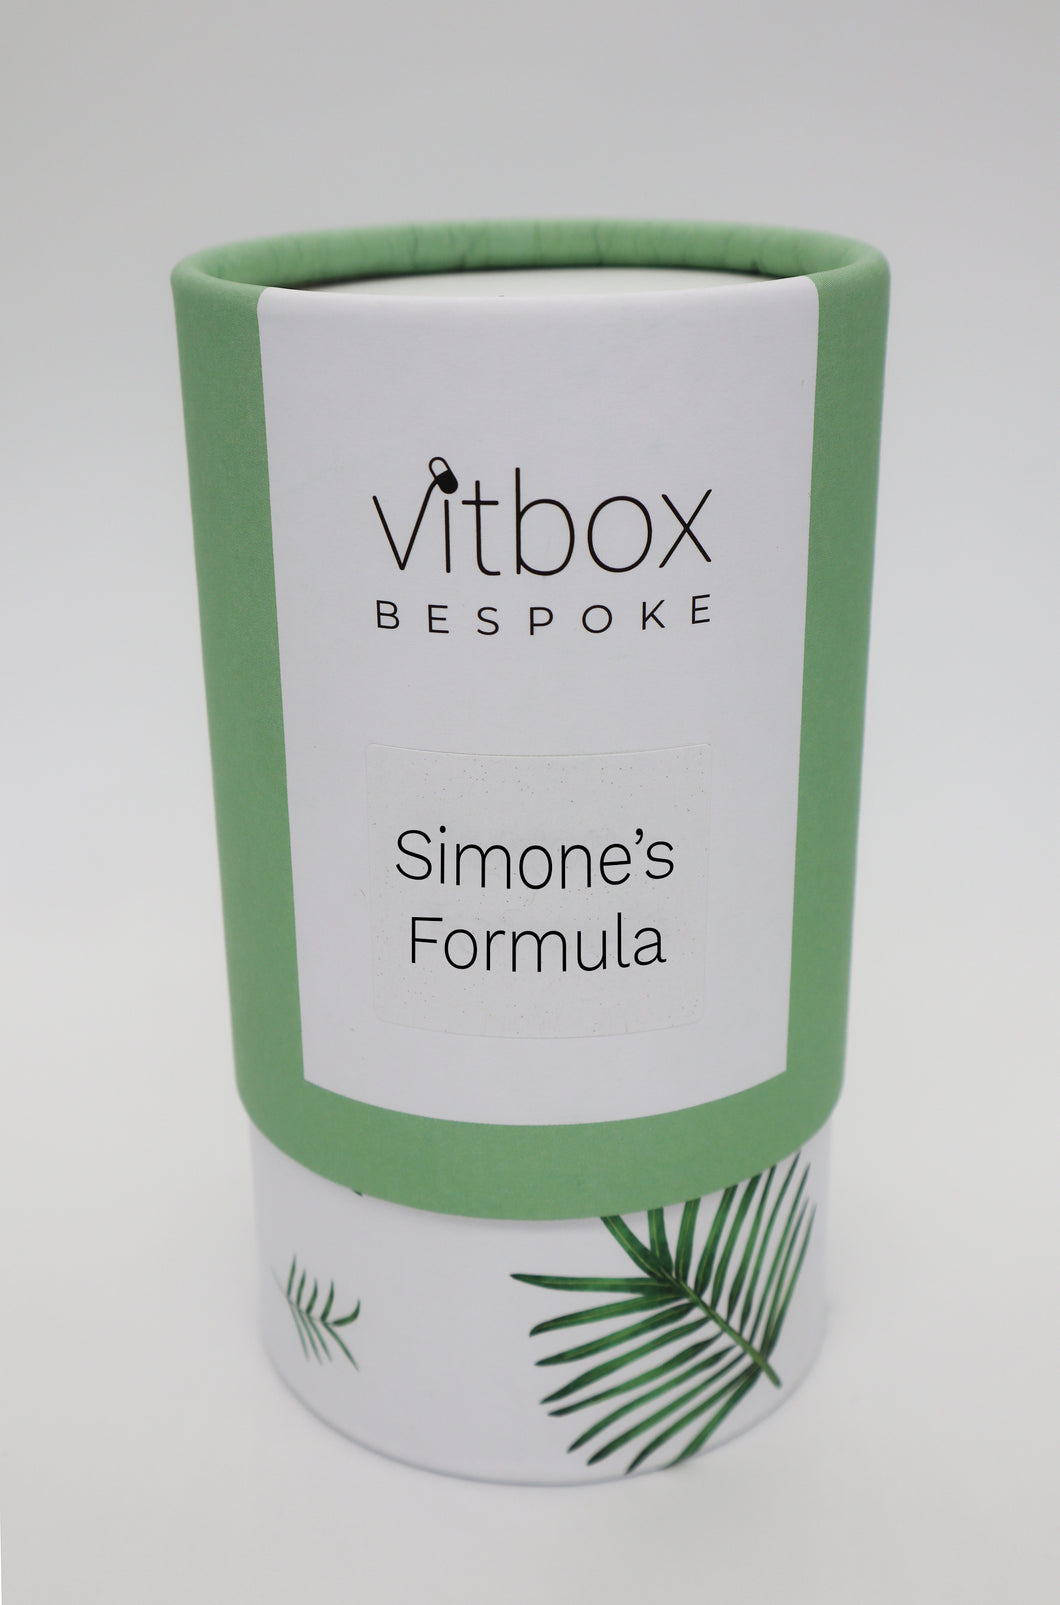 Simone's Vitbox Bespoke 12/10/2020